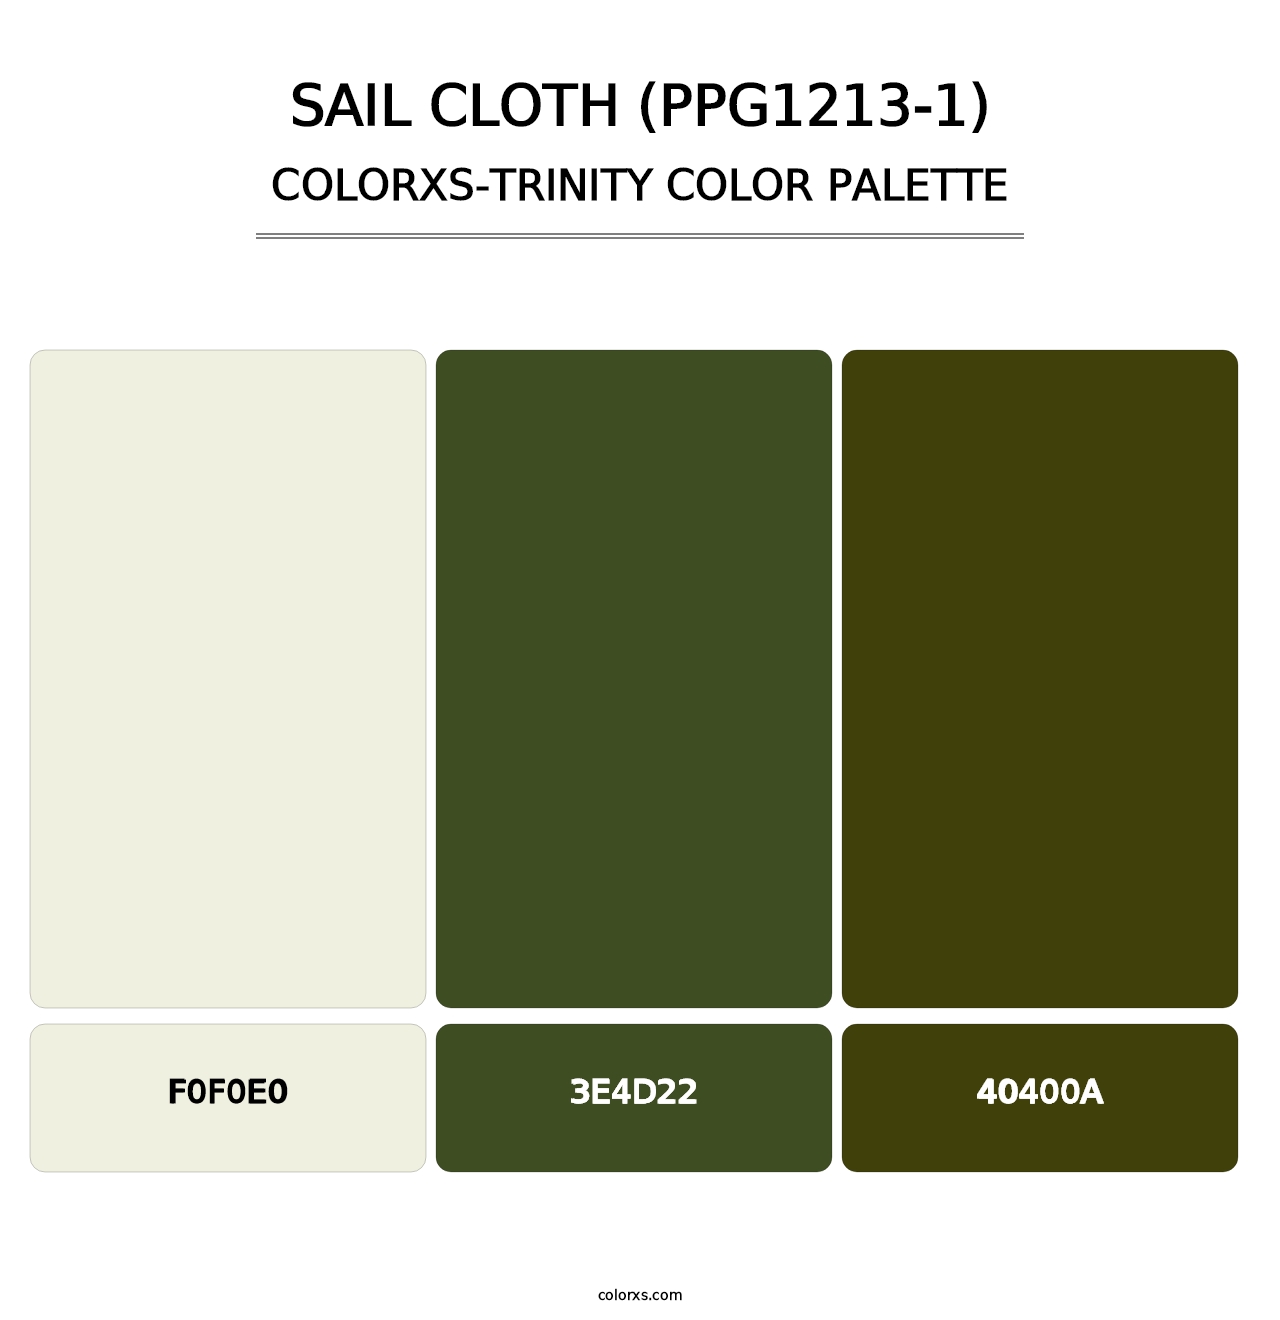 Sail Cloth (PPG1213-1) - Colorxs Trinity Palette